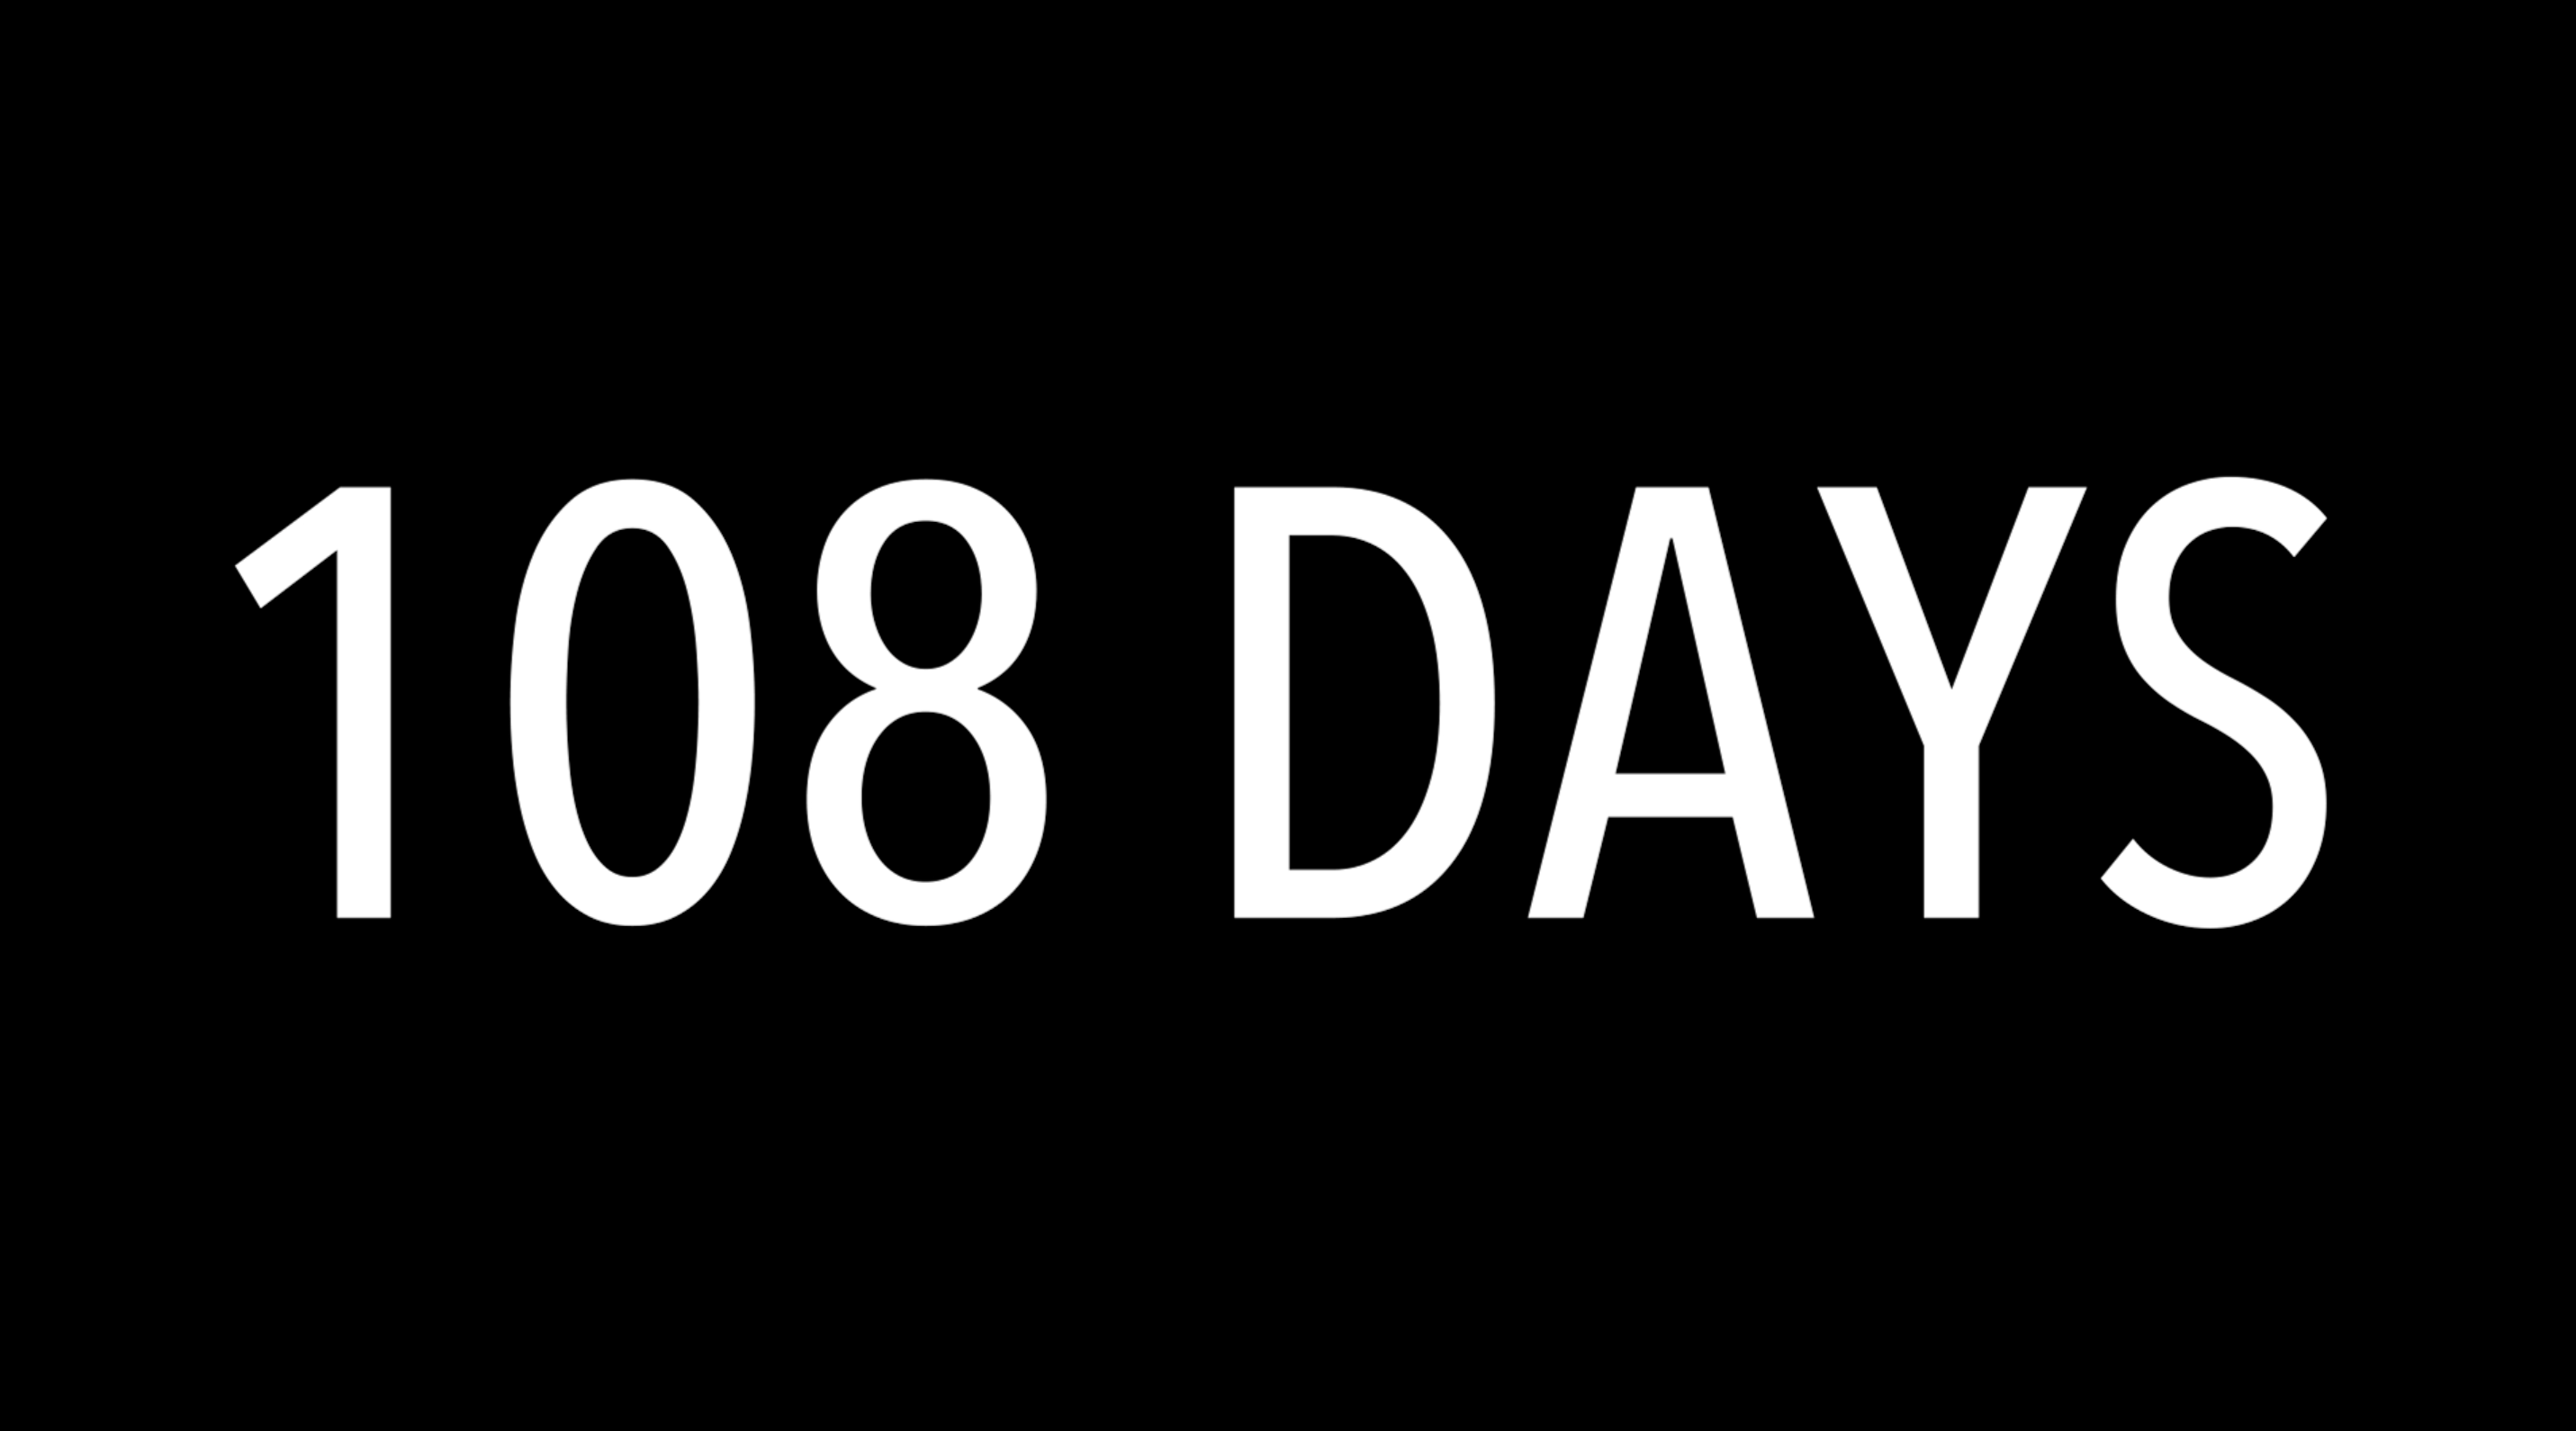 108 DAYS